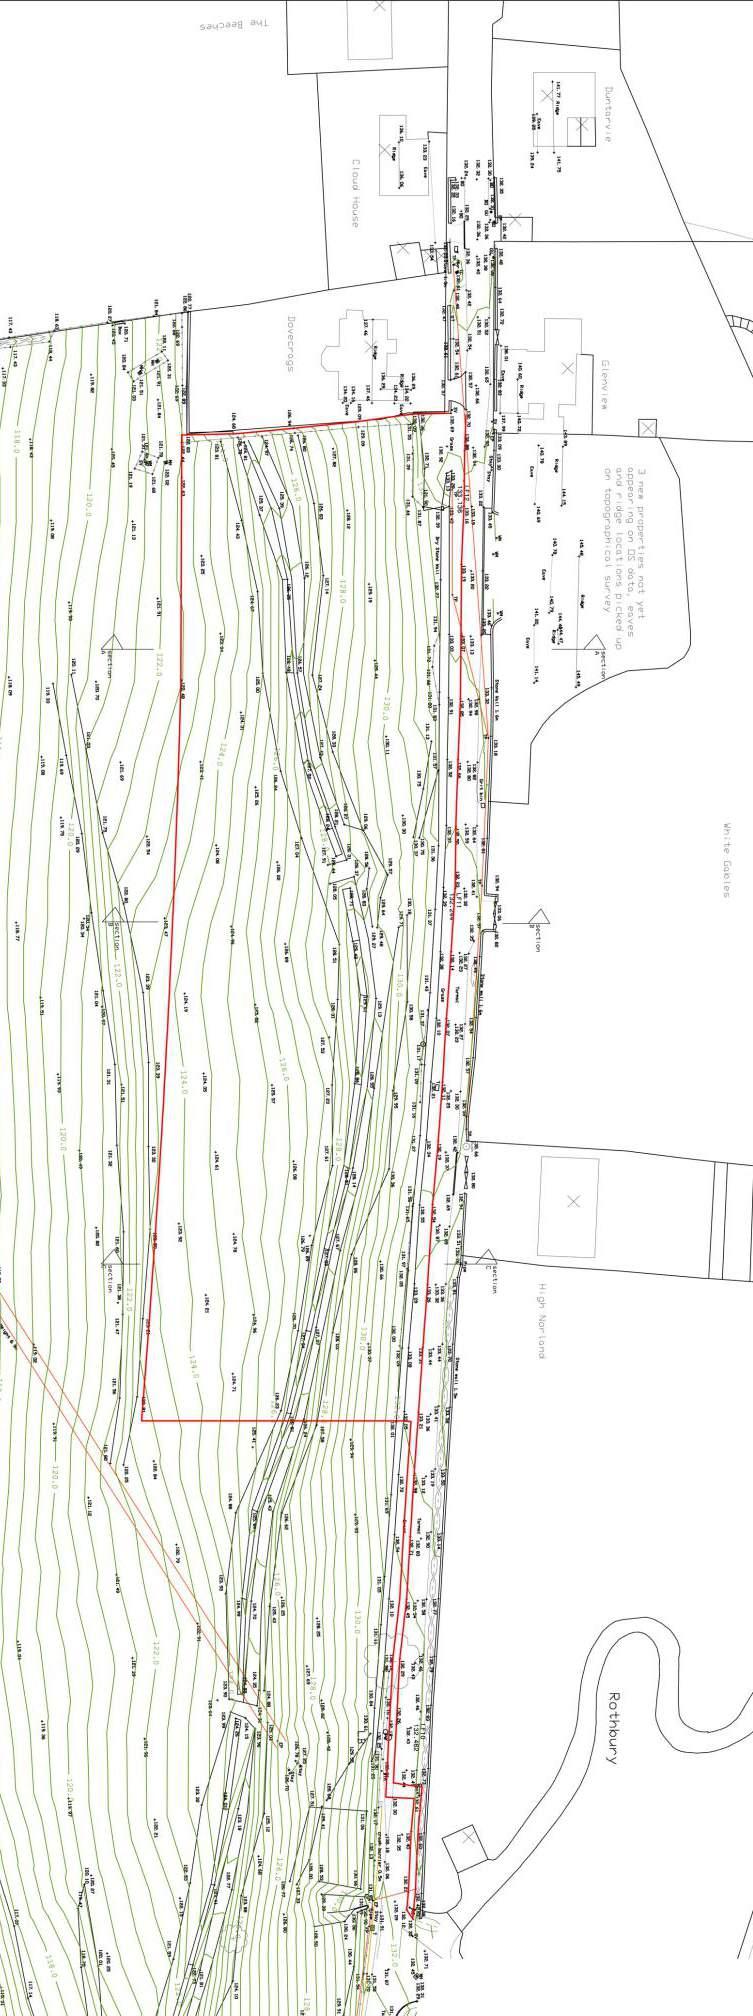 Existing site plan existing contours shown